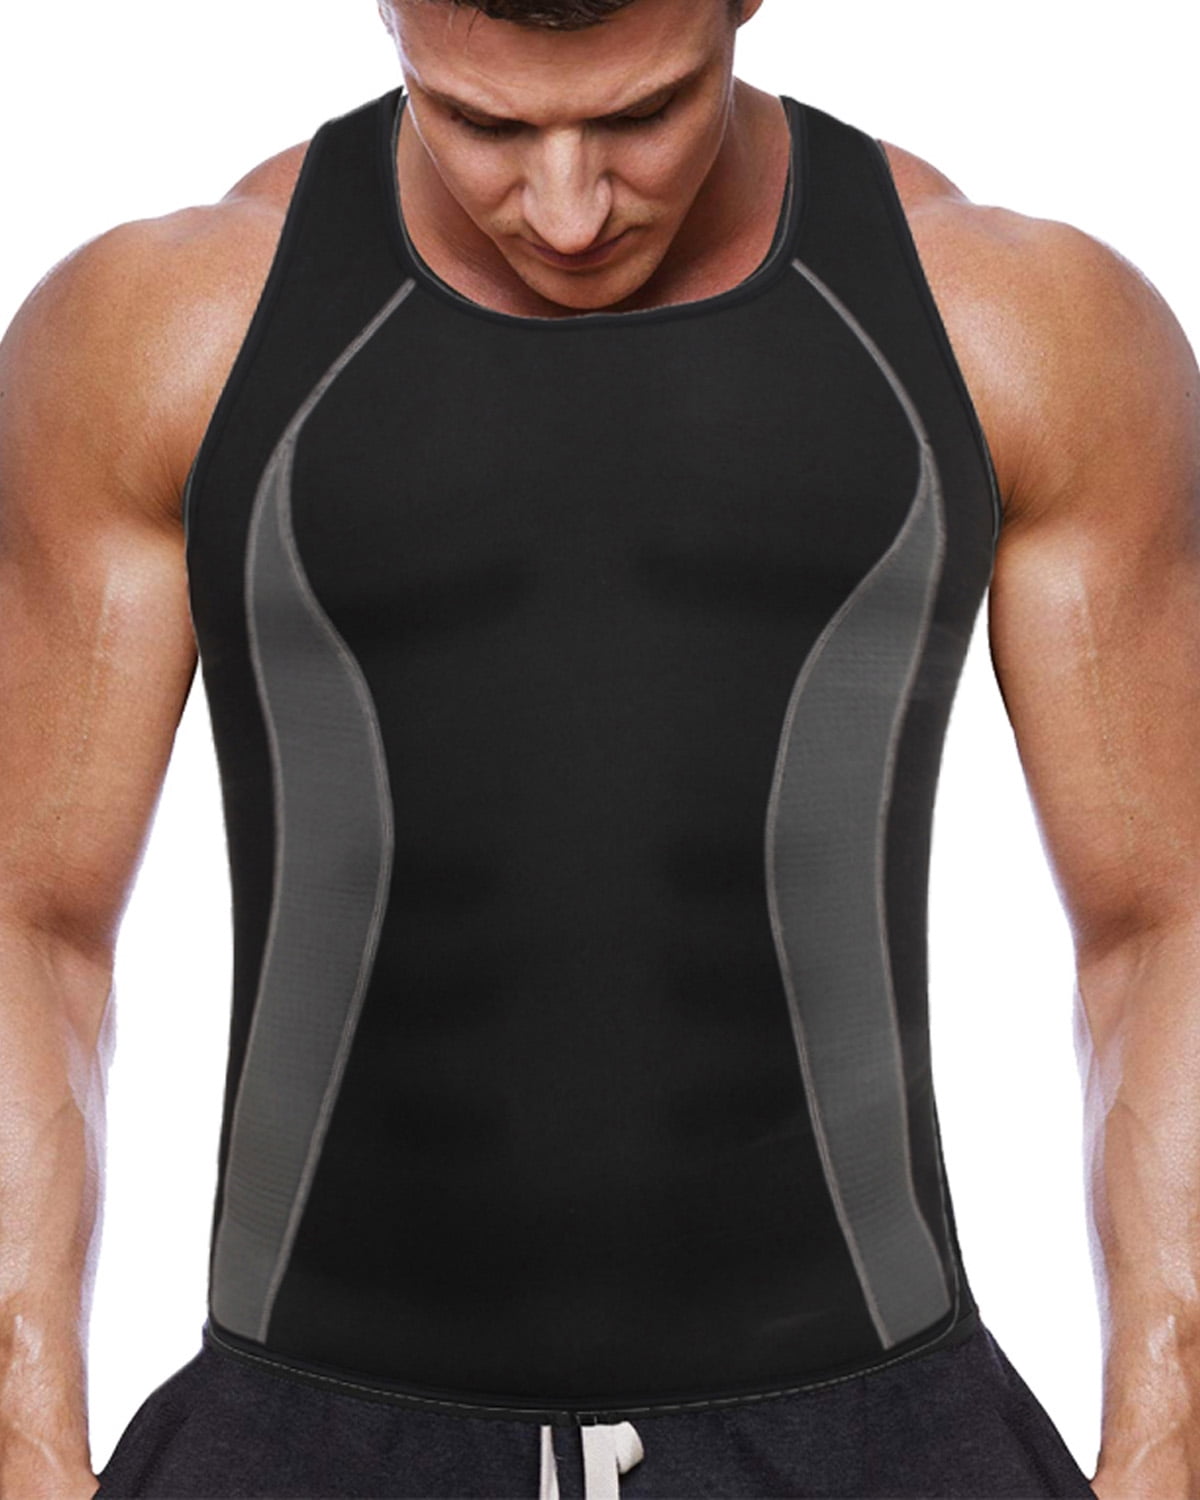 Waist Trainer Vest for Men Weight Loss Tummy Control Sauna Tank Top Body Shaper